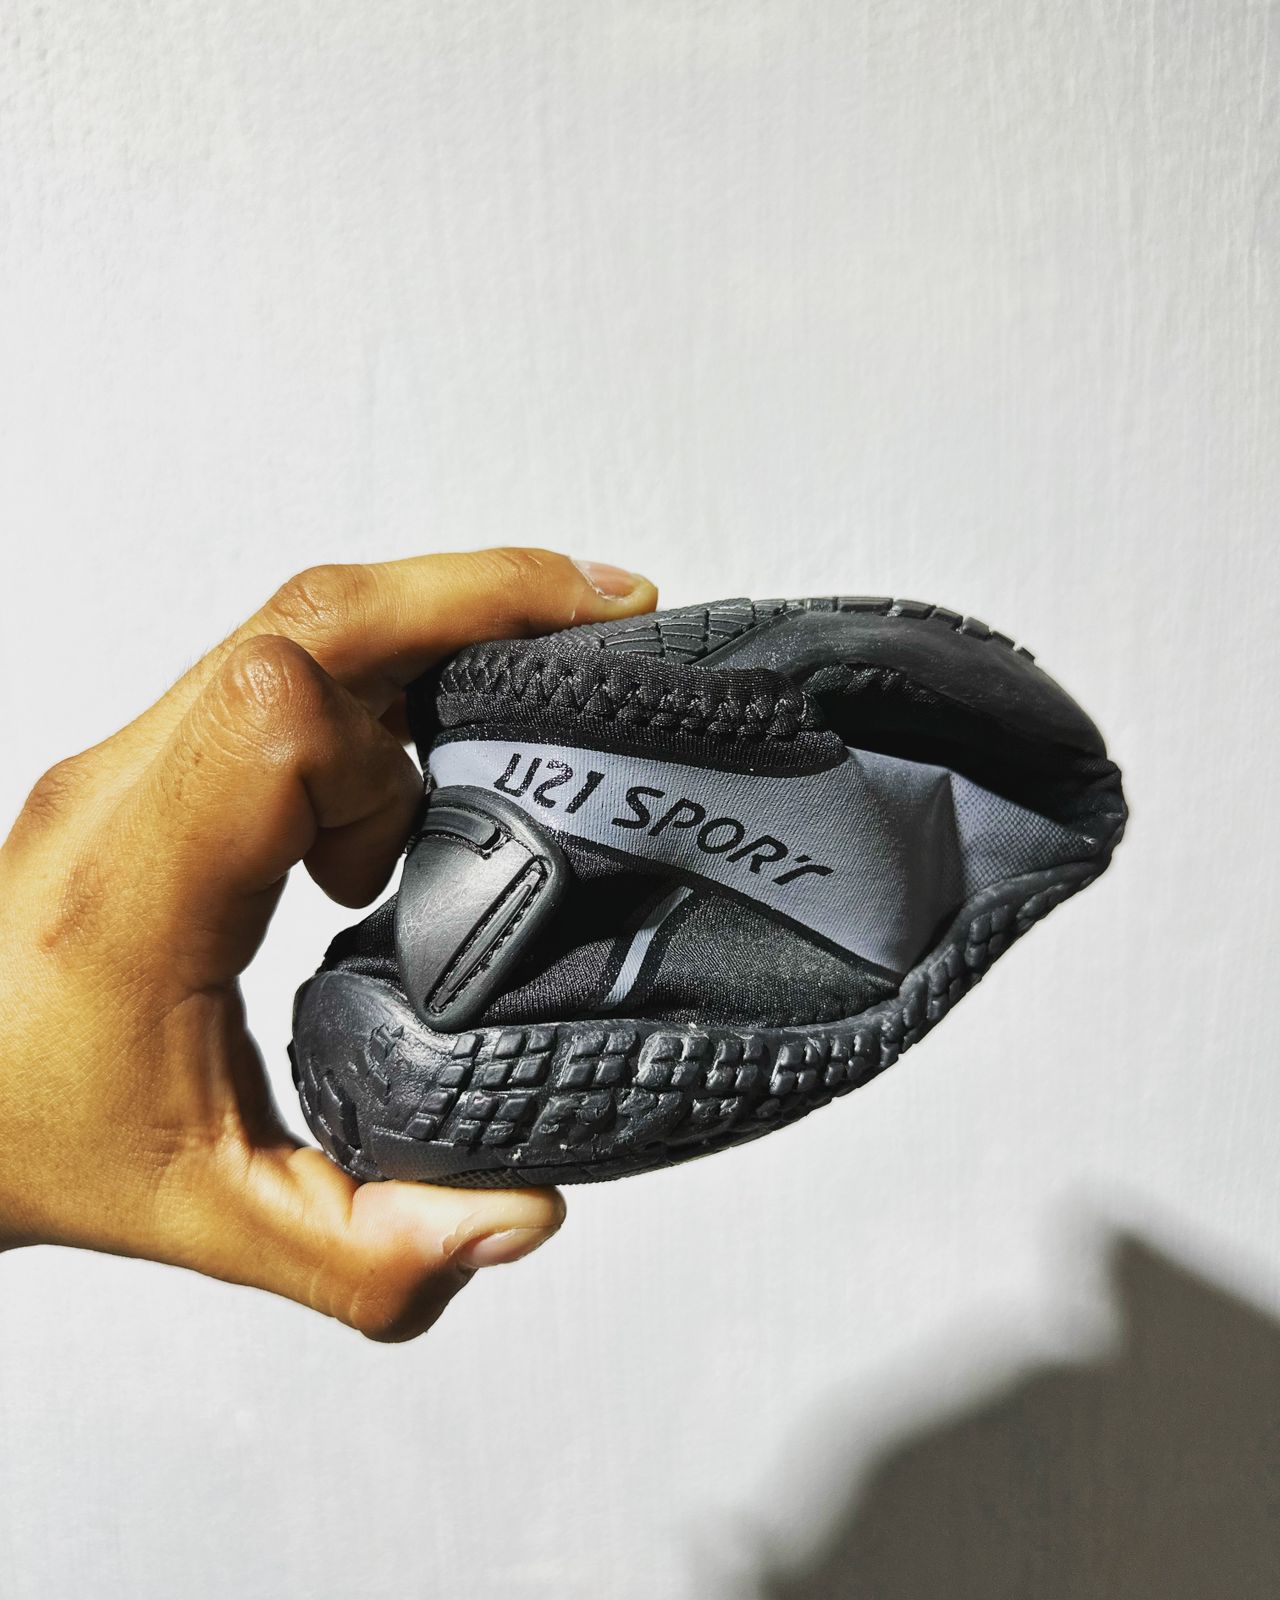 Zapato acuatico de secado ultra rapido modelo blackbeach original de uzi sport